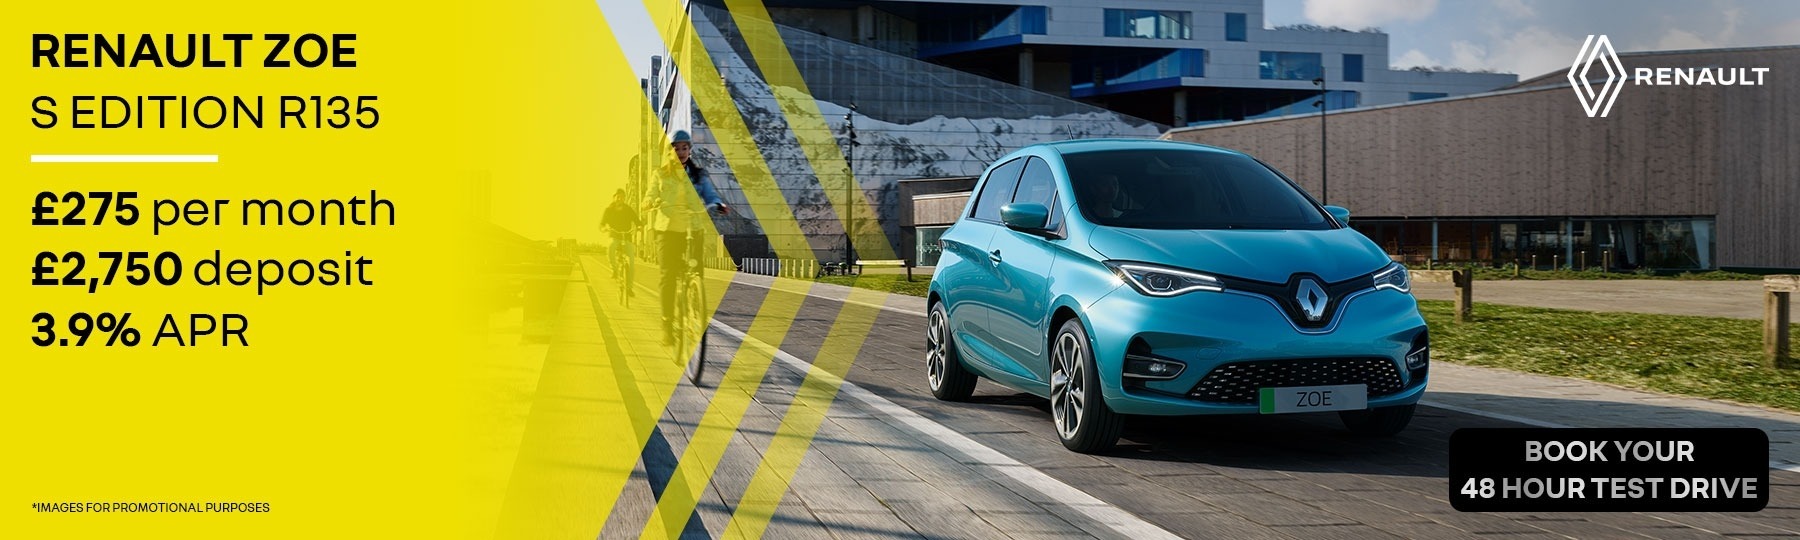 Renault ZOE New Car Offer